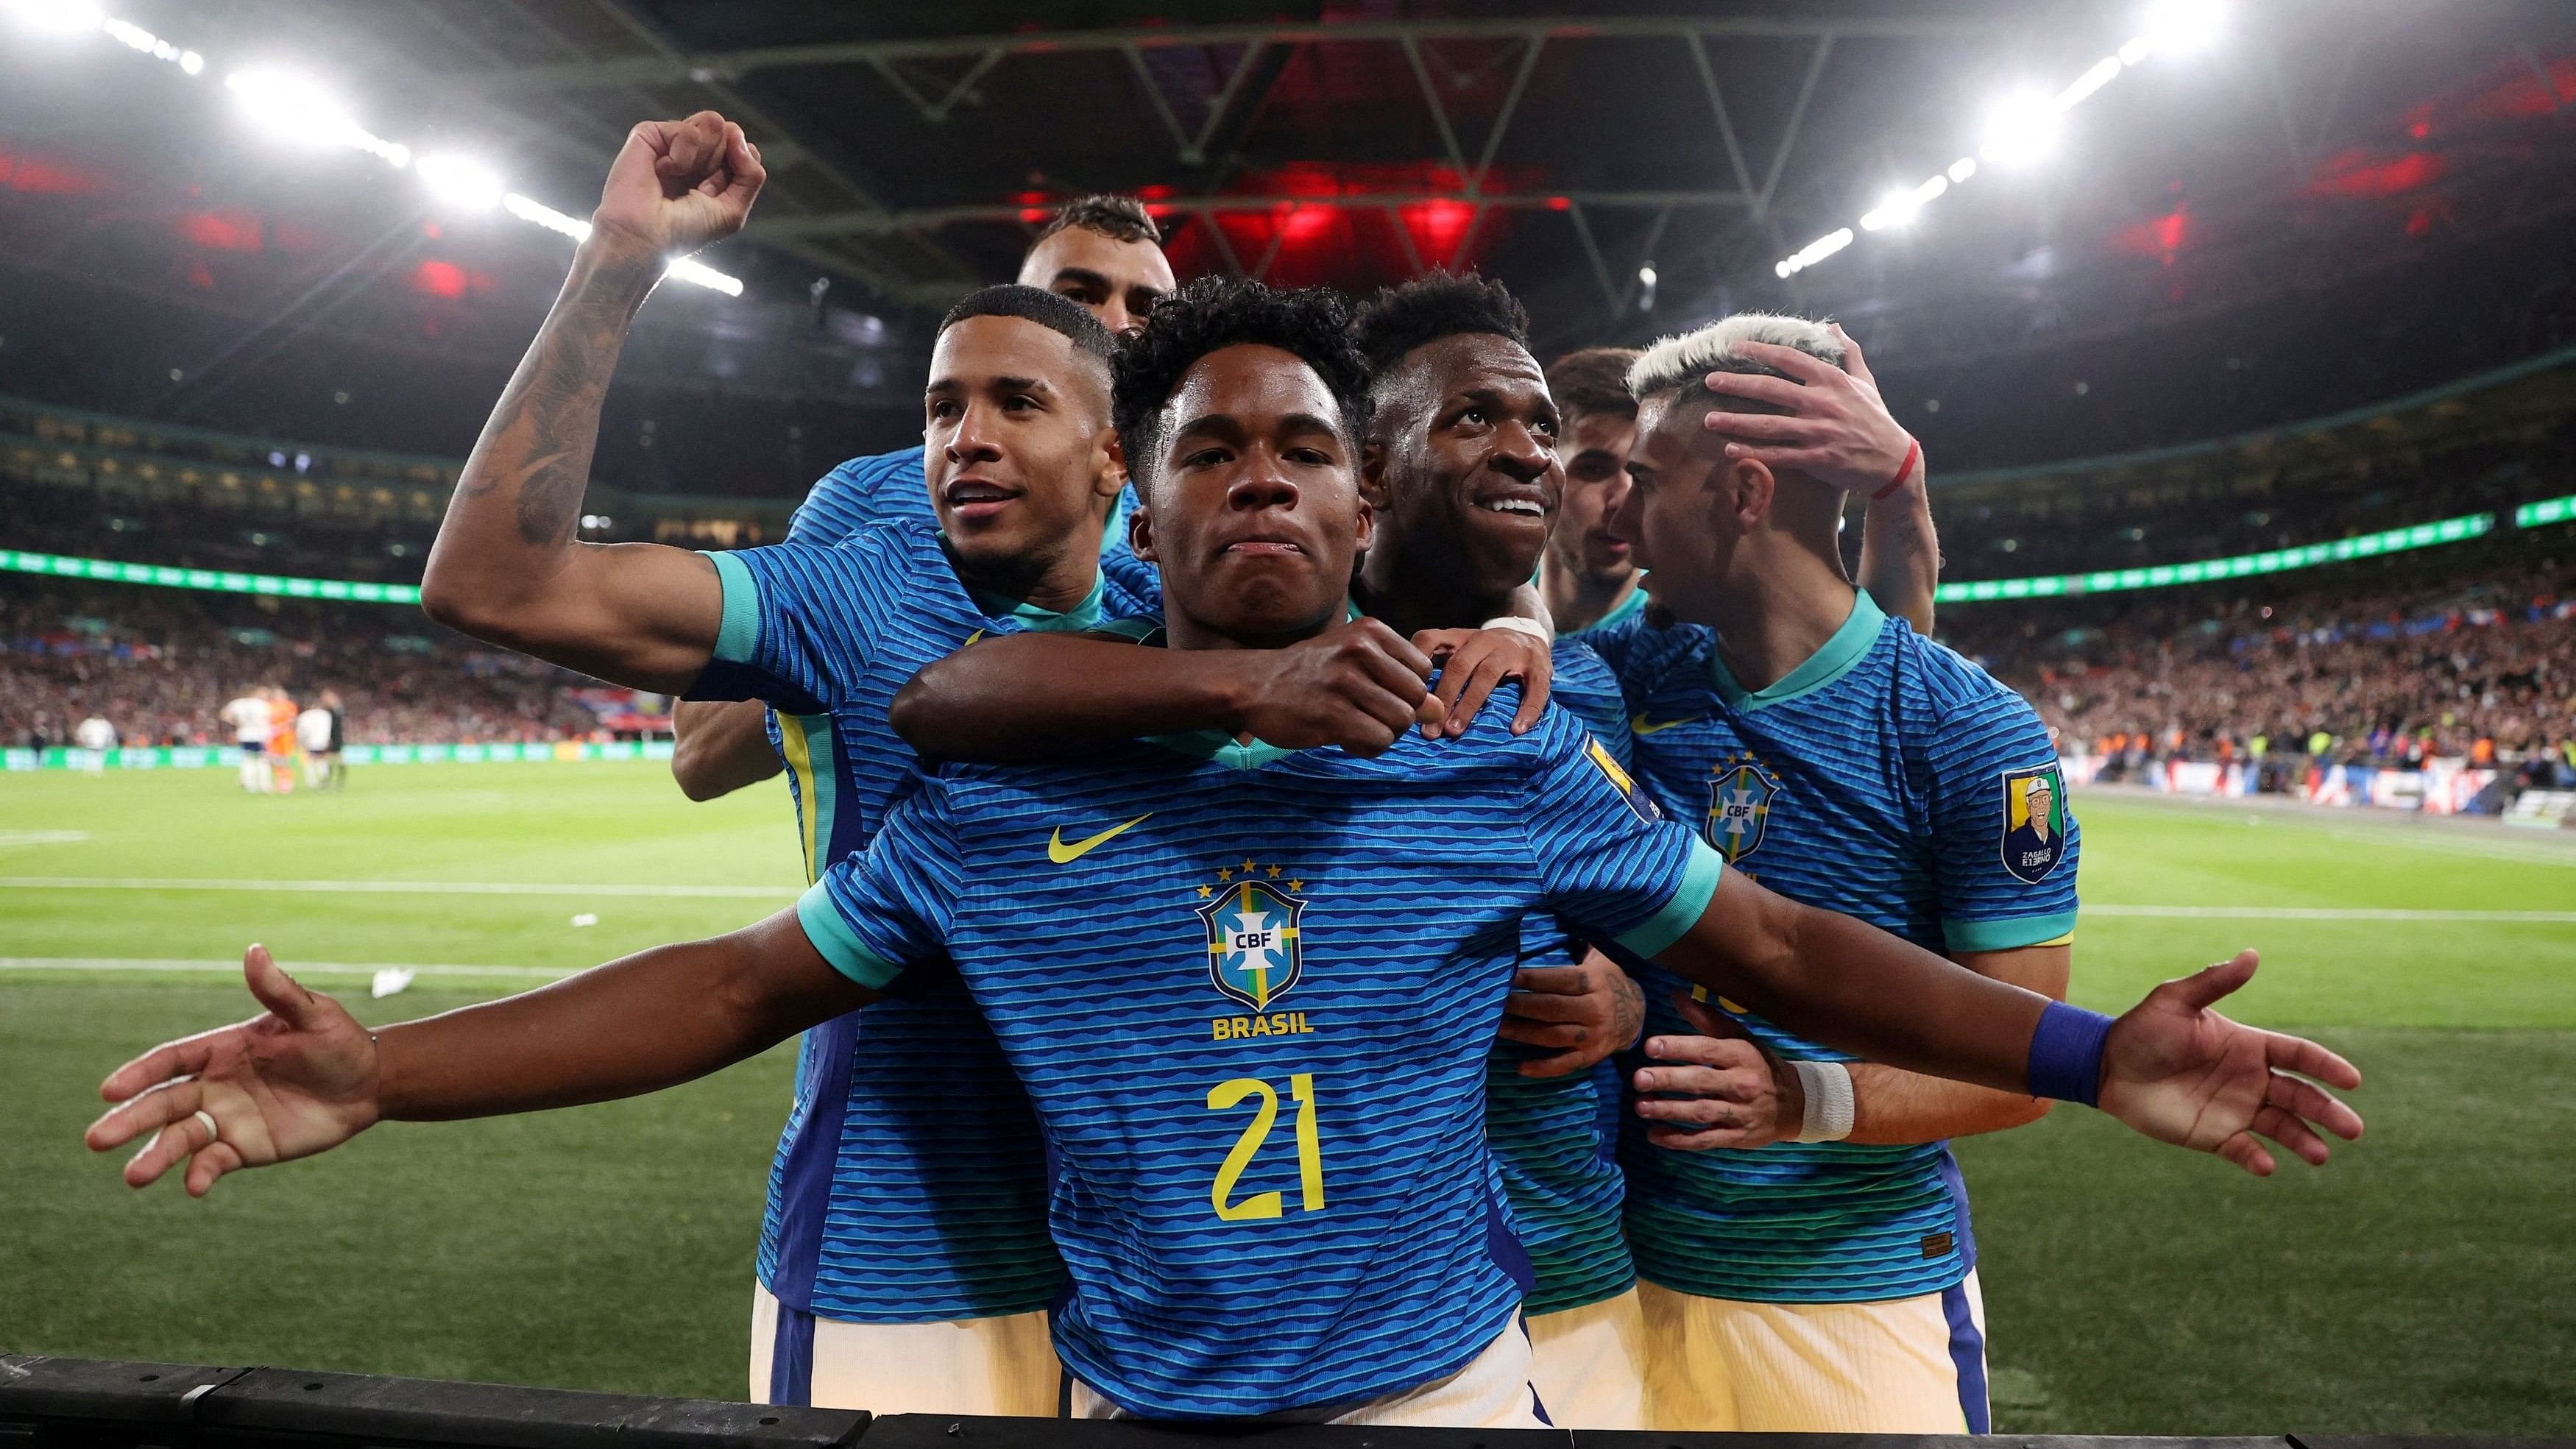 <div class="paragraphs"><p>Brazil's Endrick celebrates scoring their first goal with Vinicius Junior and teammates</p></div>